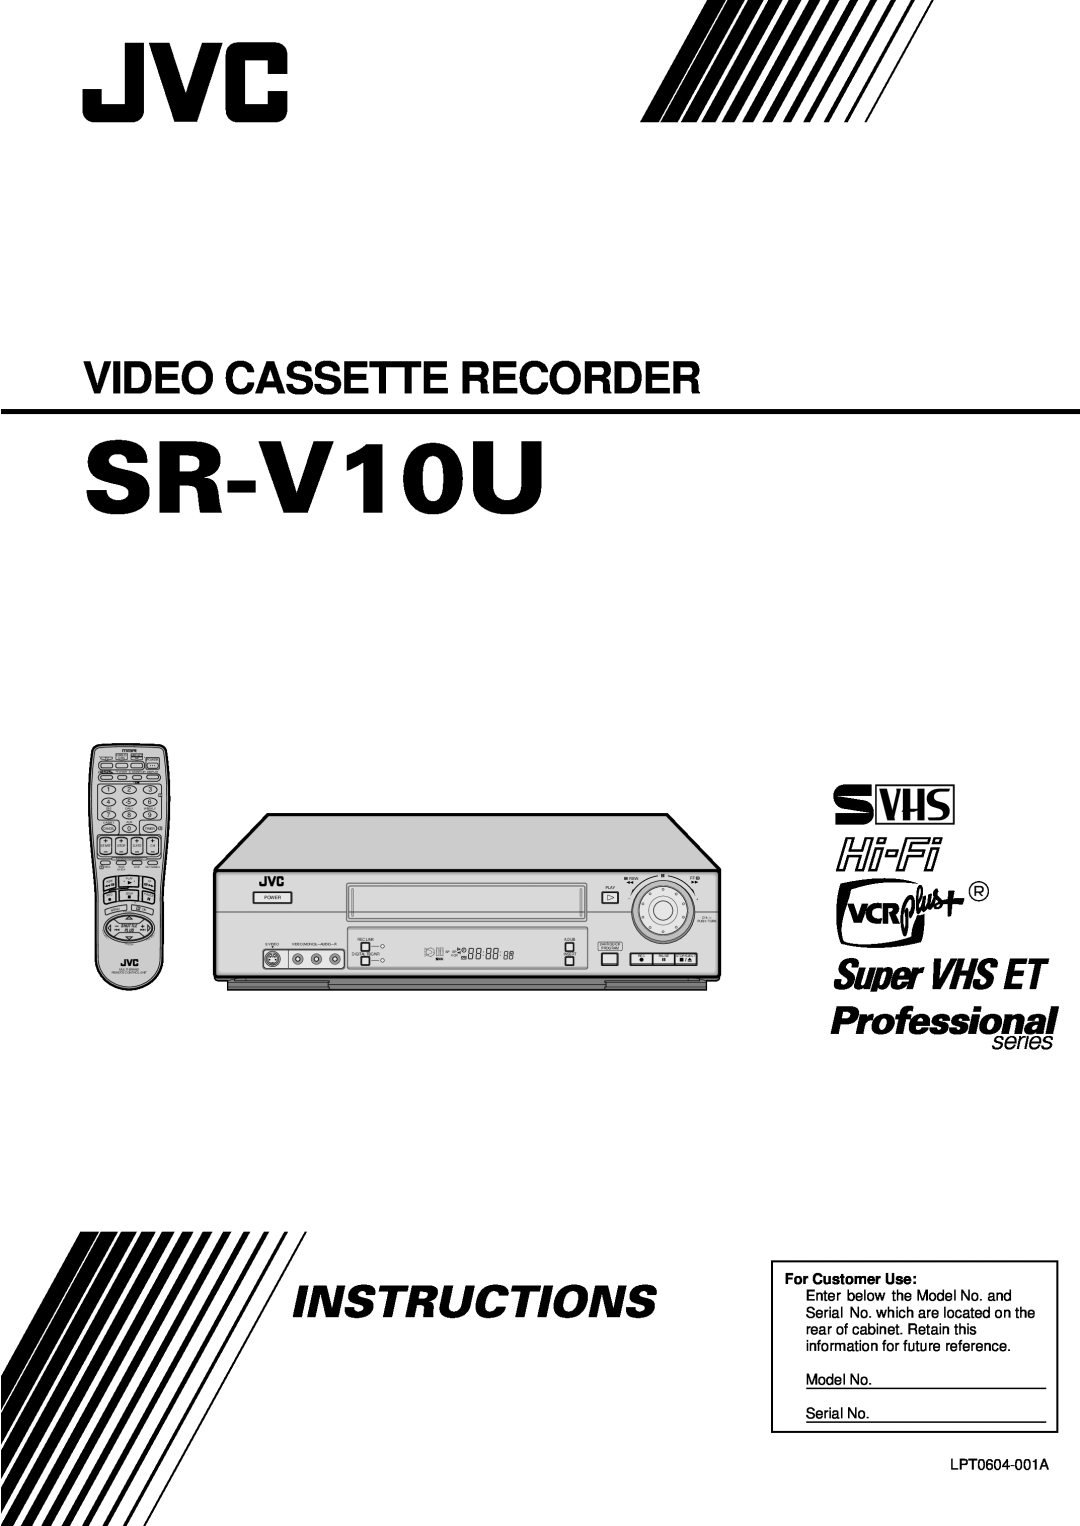 JVC SR-V10U manual Video Cassette Recorder, Instructions, For Customer Use, Model No Serial No, LPT0604-001A 